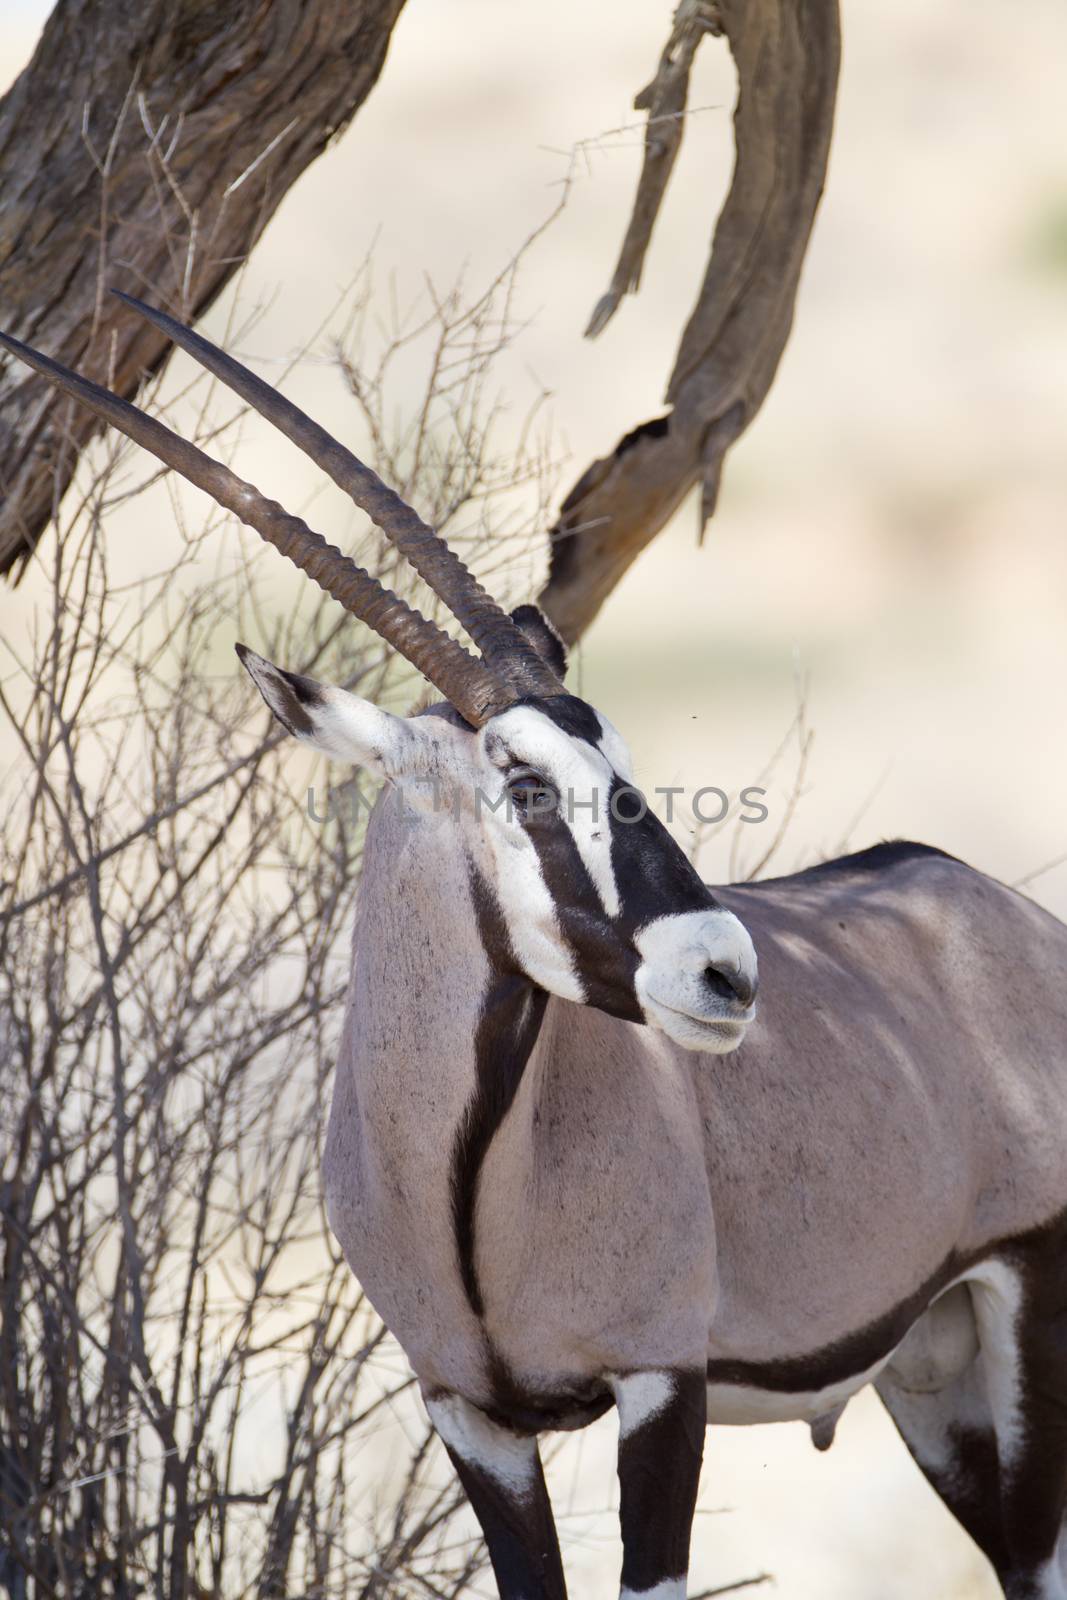 Oryx gemsbok in the wilderness by ozkanzozmen